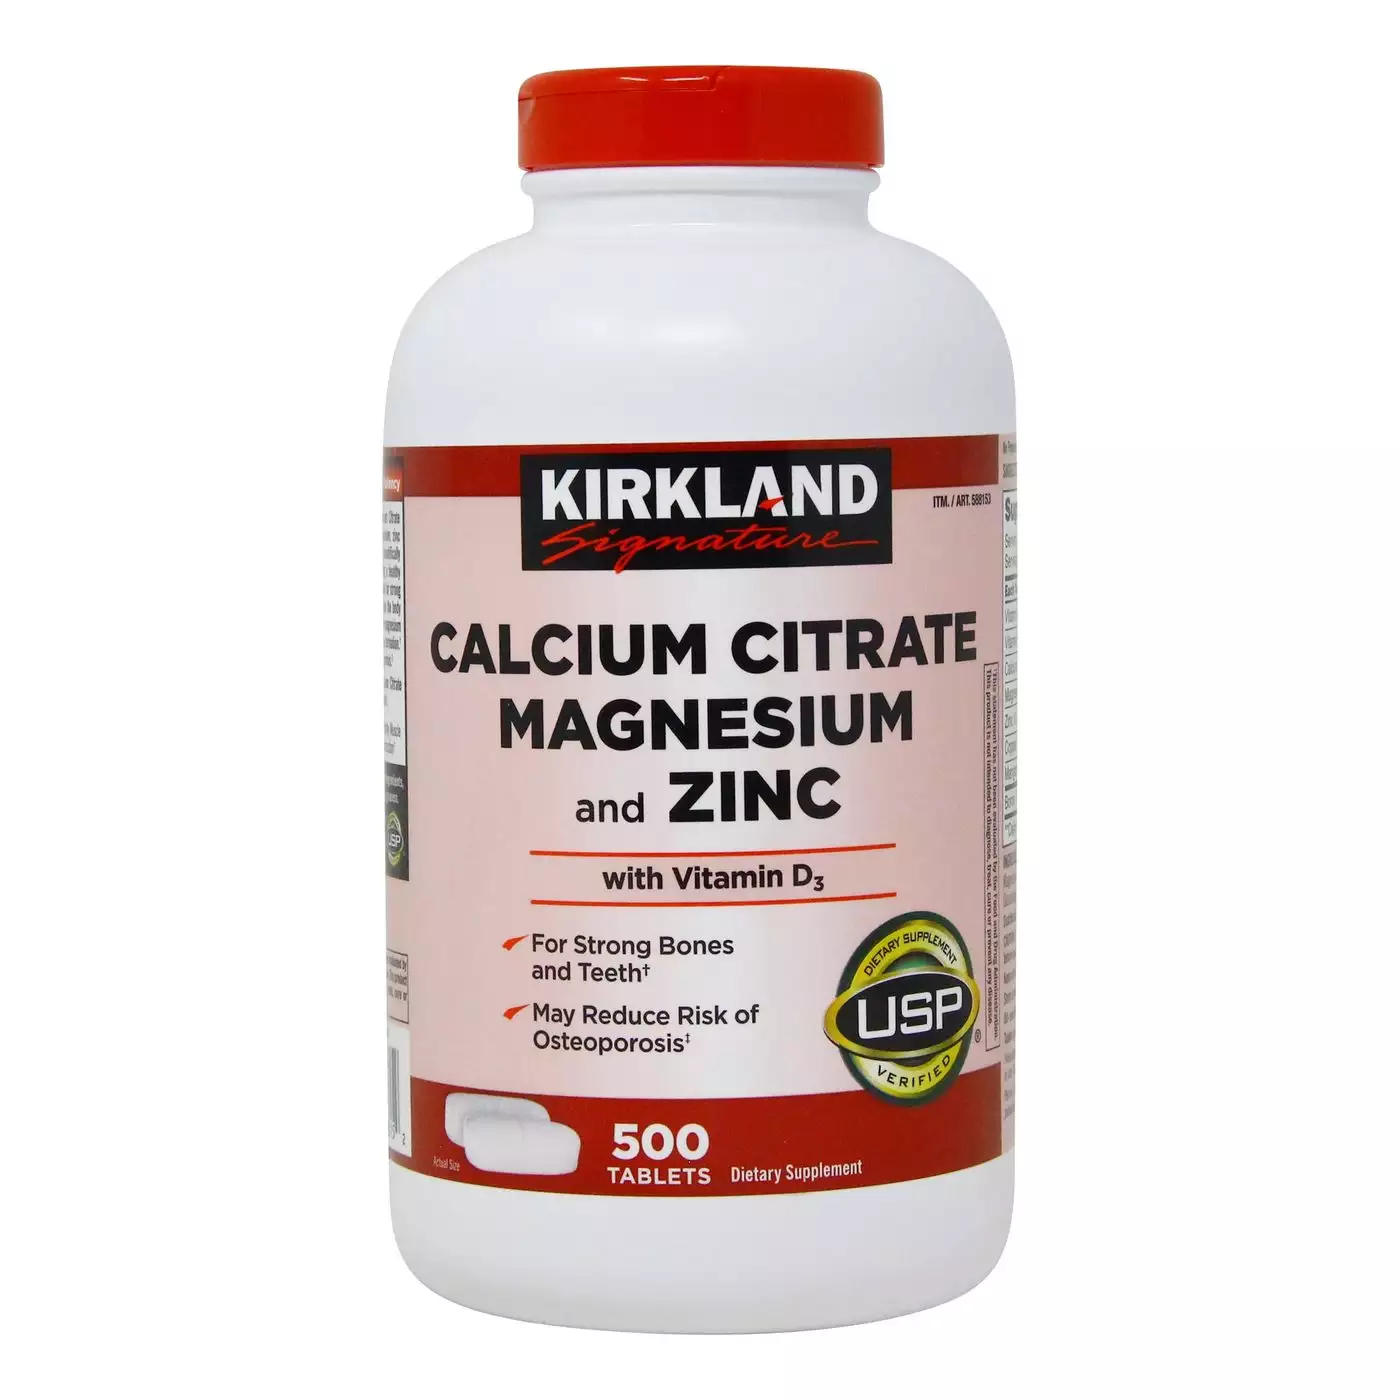 Kirkland Signature Calcium Citrate Magnesium and Zinc - 500 Tablets 